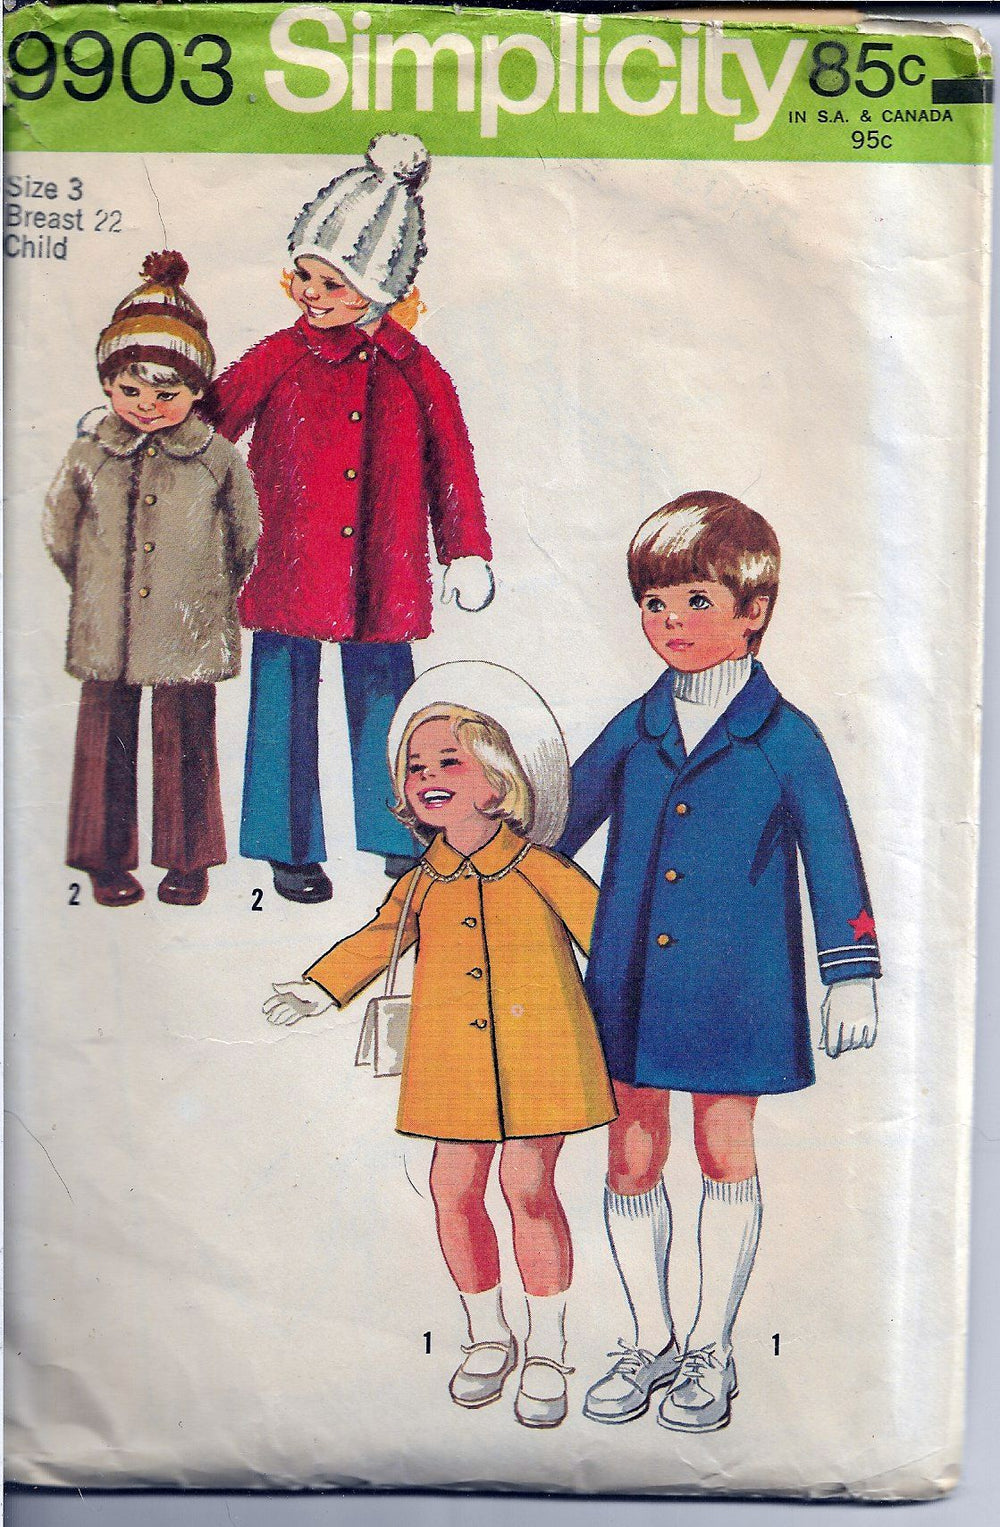 Simplicity 9903 Toddler Girls Boys Winter Spring Coat Vintage Sewing Pattern 1970s - VintageStitching - Vintage Sewing Patterns